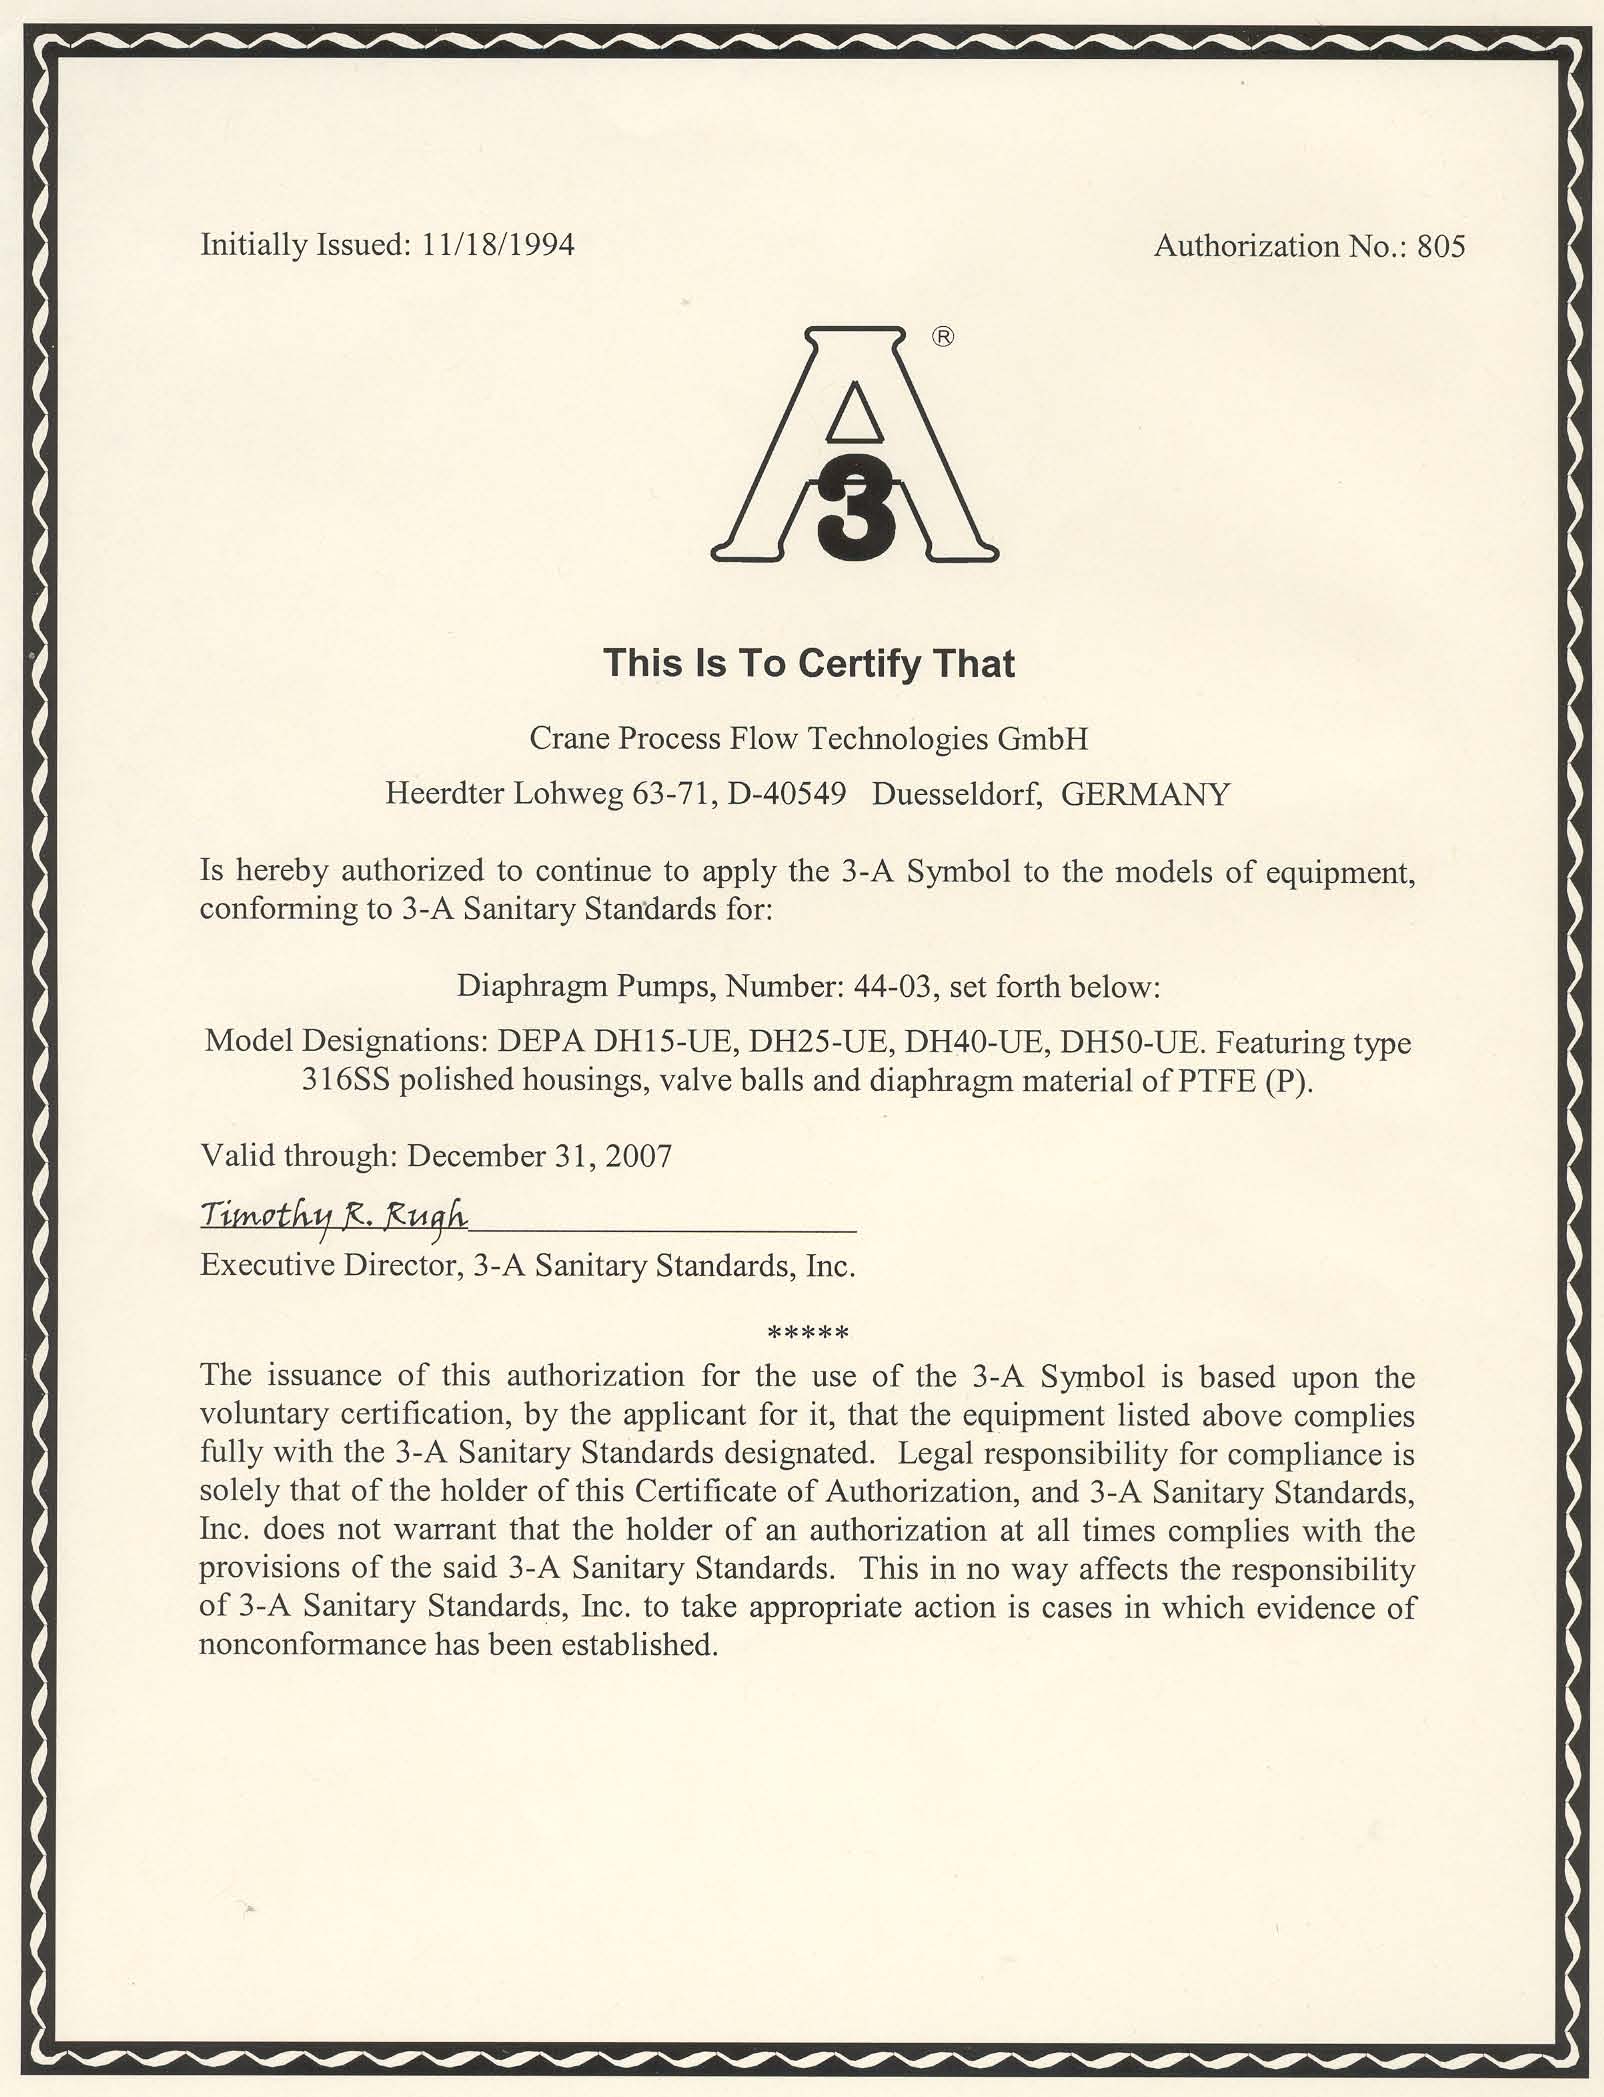 DEPA DH Series - 3A Certificate